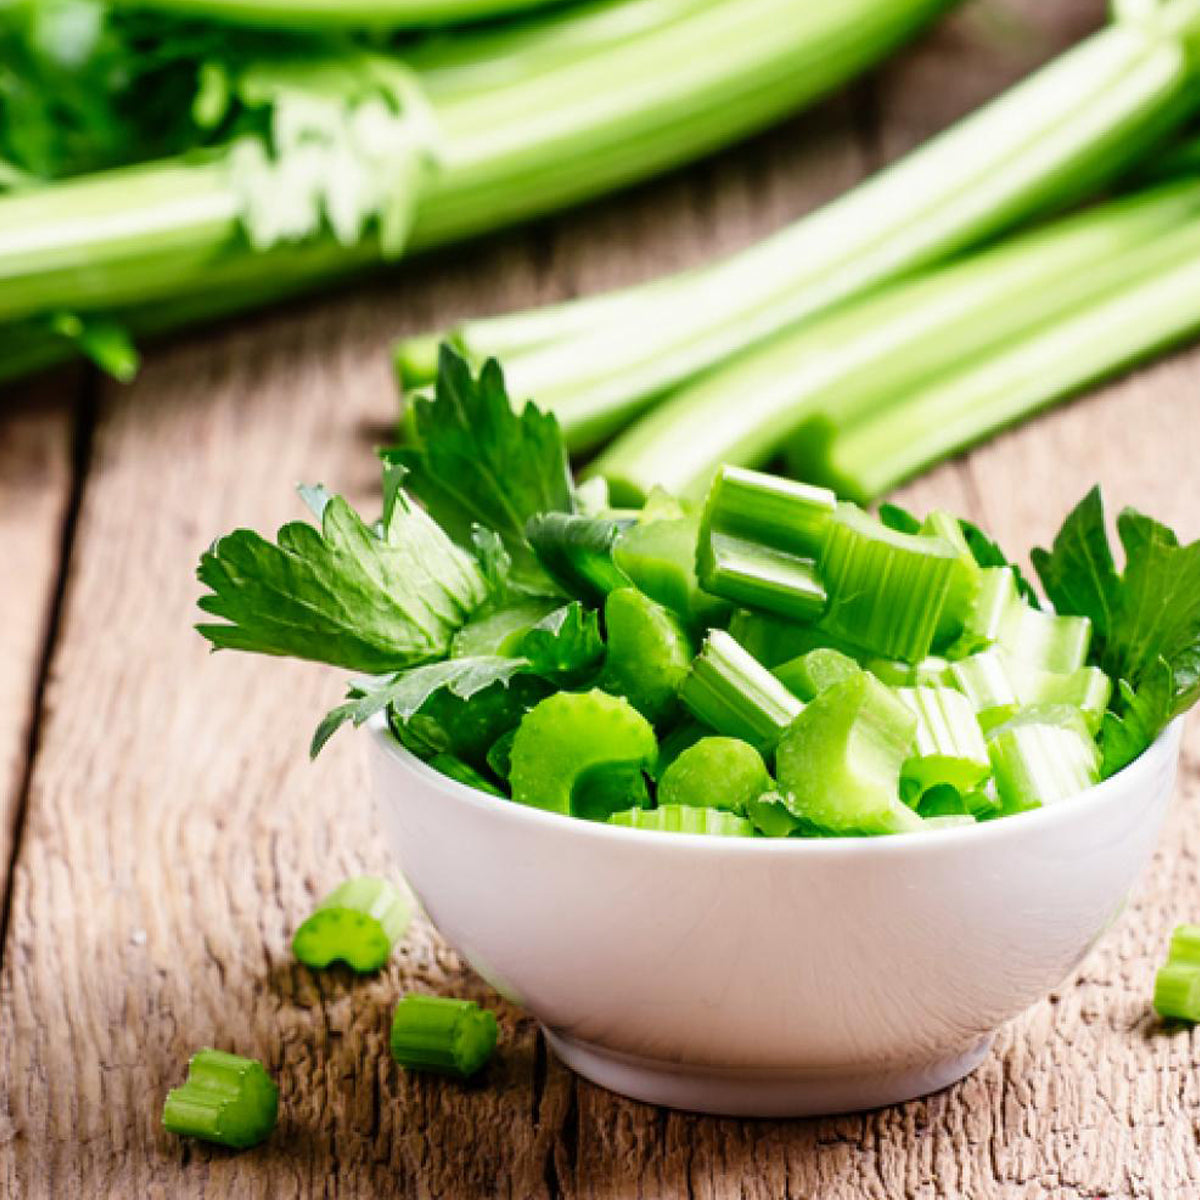 Nature's Restoring Power: Celery